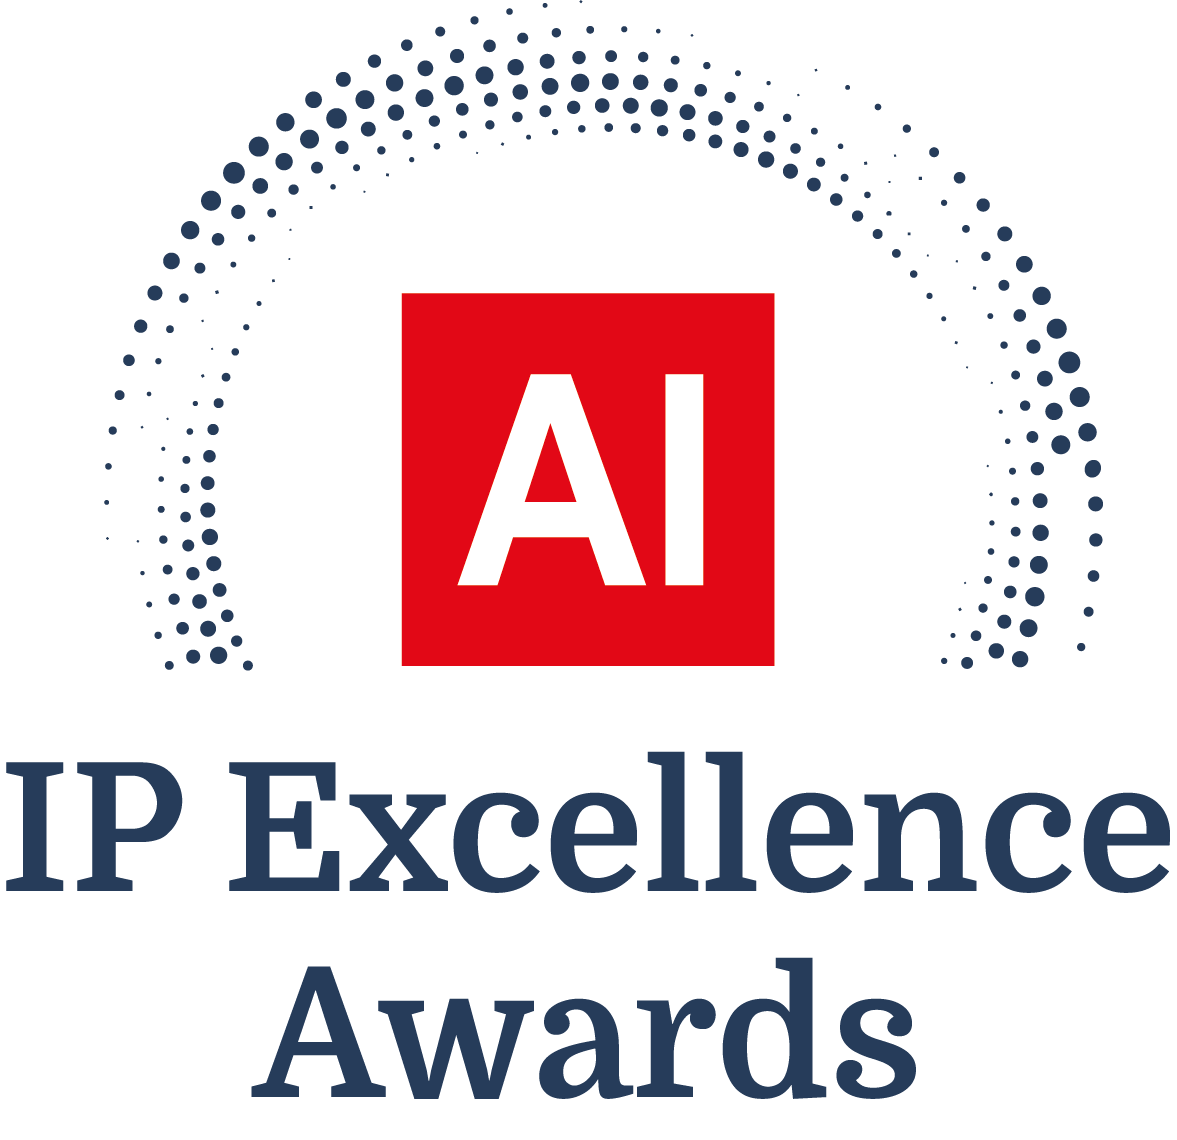 Award Logo - Intellectual Property Awards